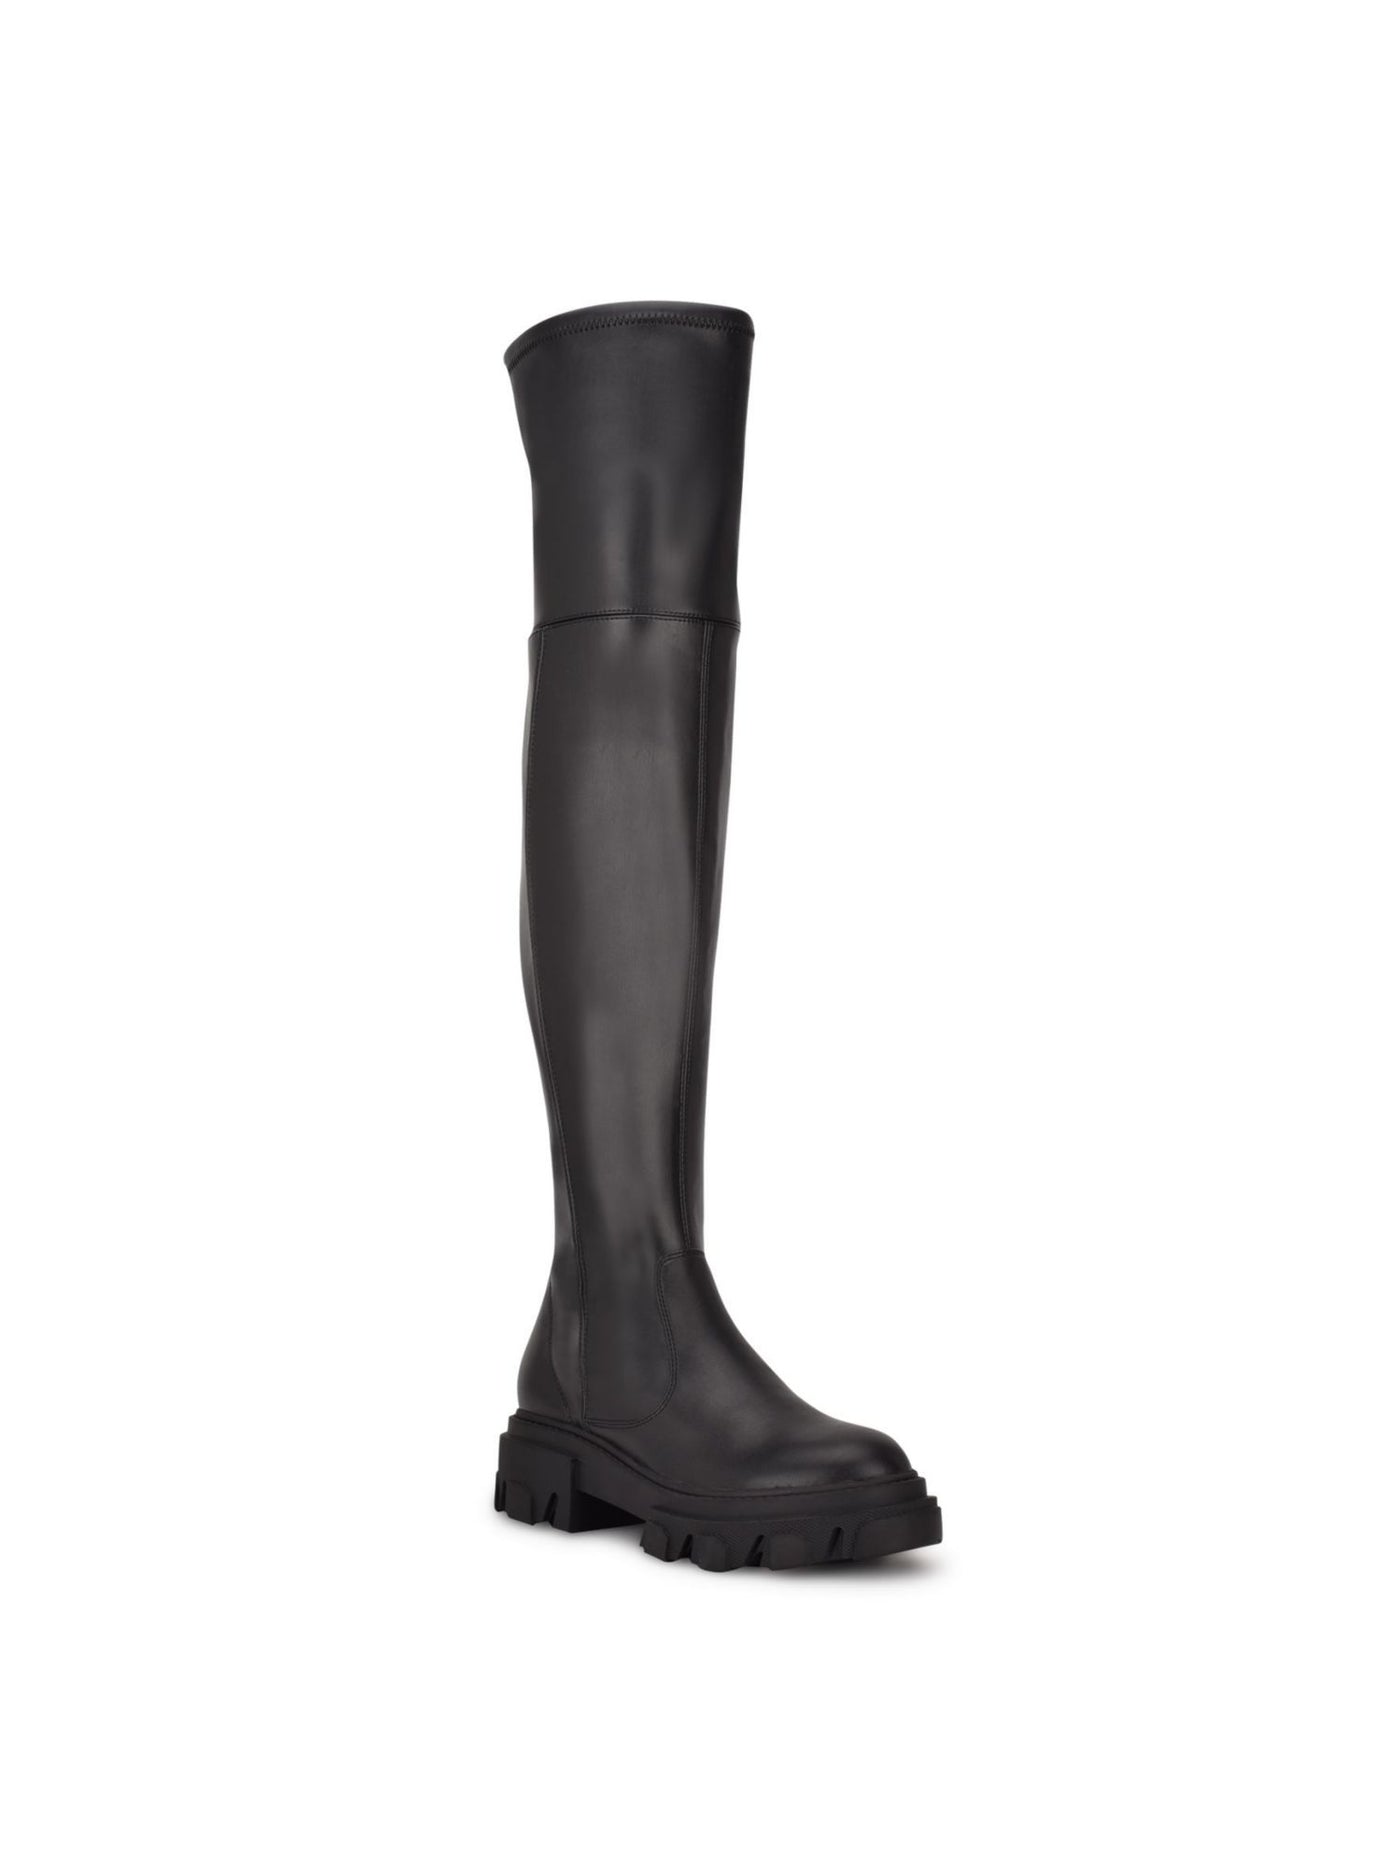 NINE WEST Womens Black 1" Platform Goring Lug Sole Cushioned Cellie Round Toe Block Heel Zip-Up Boots Shoes 8.5 M